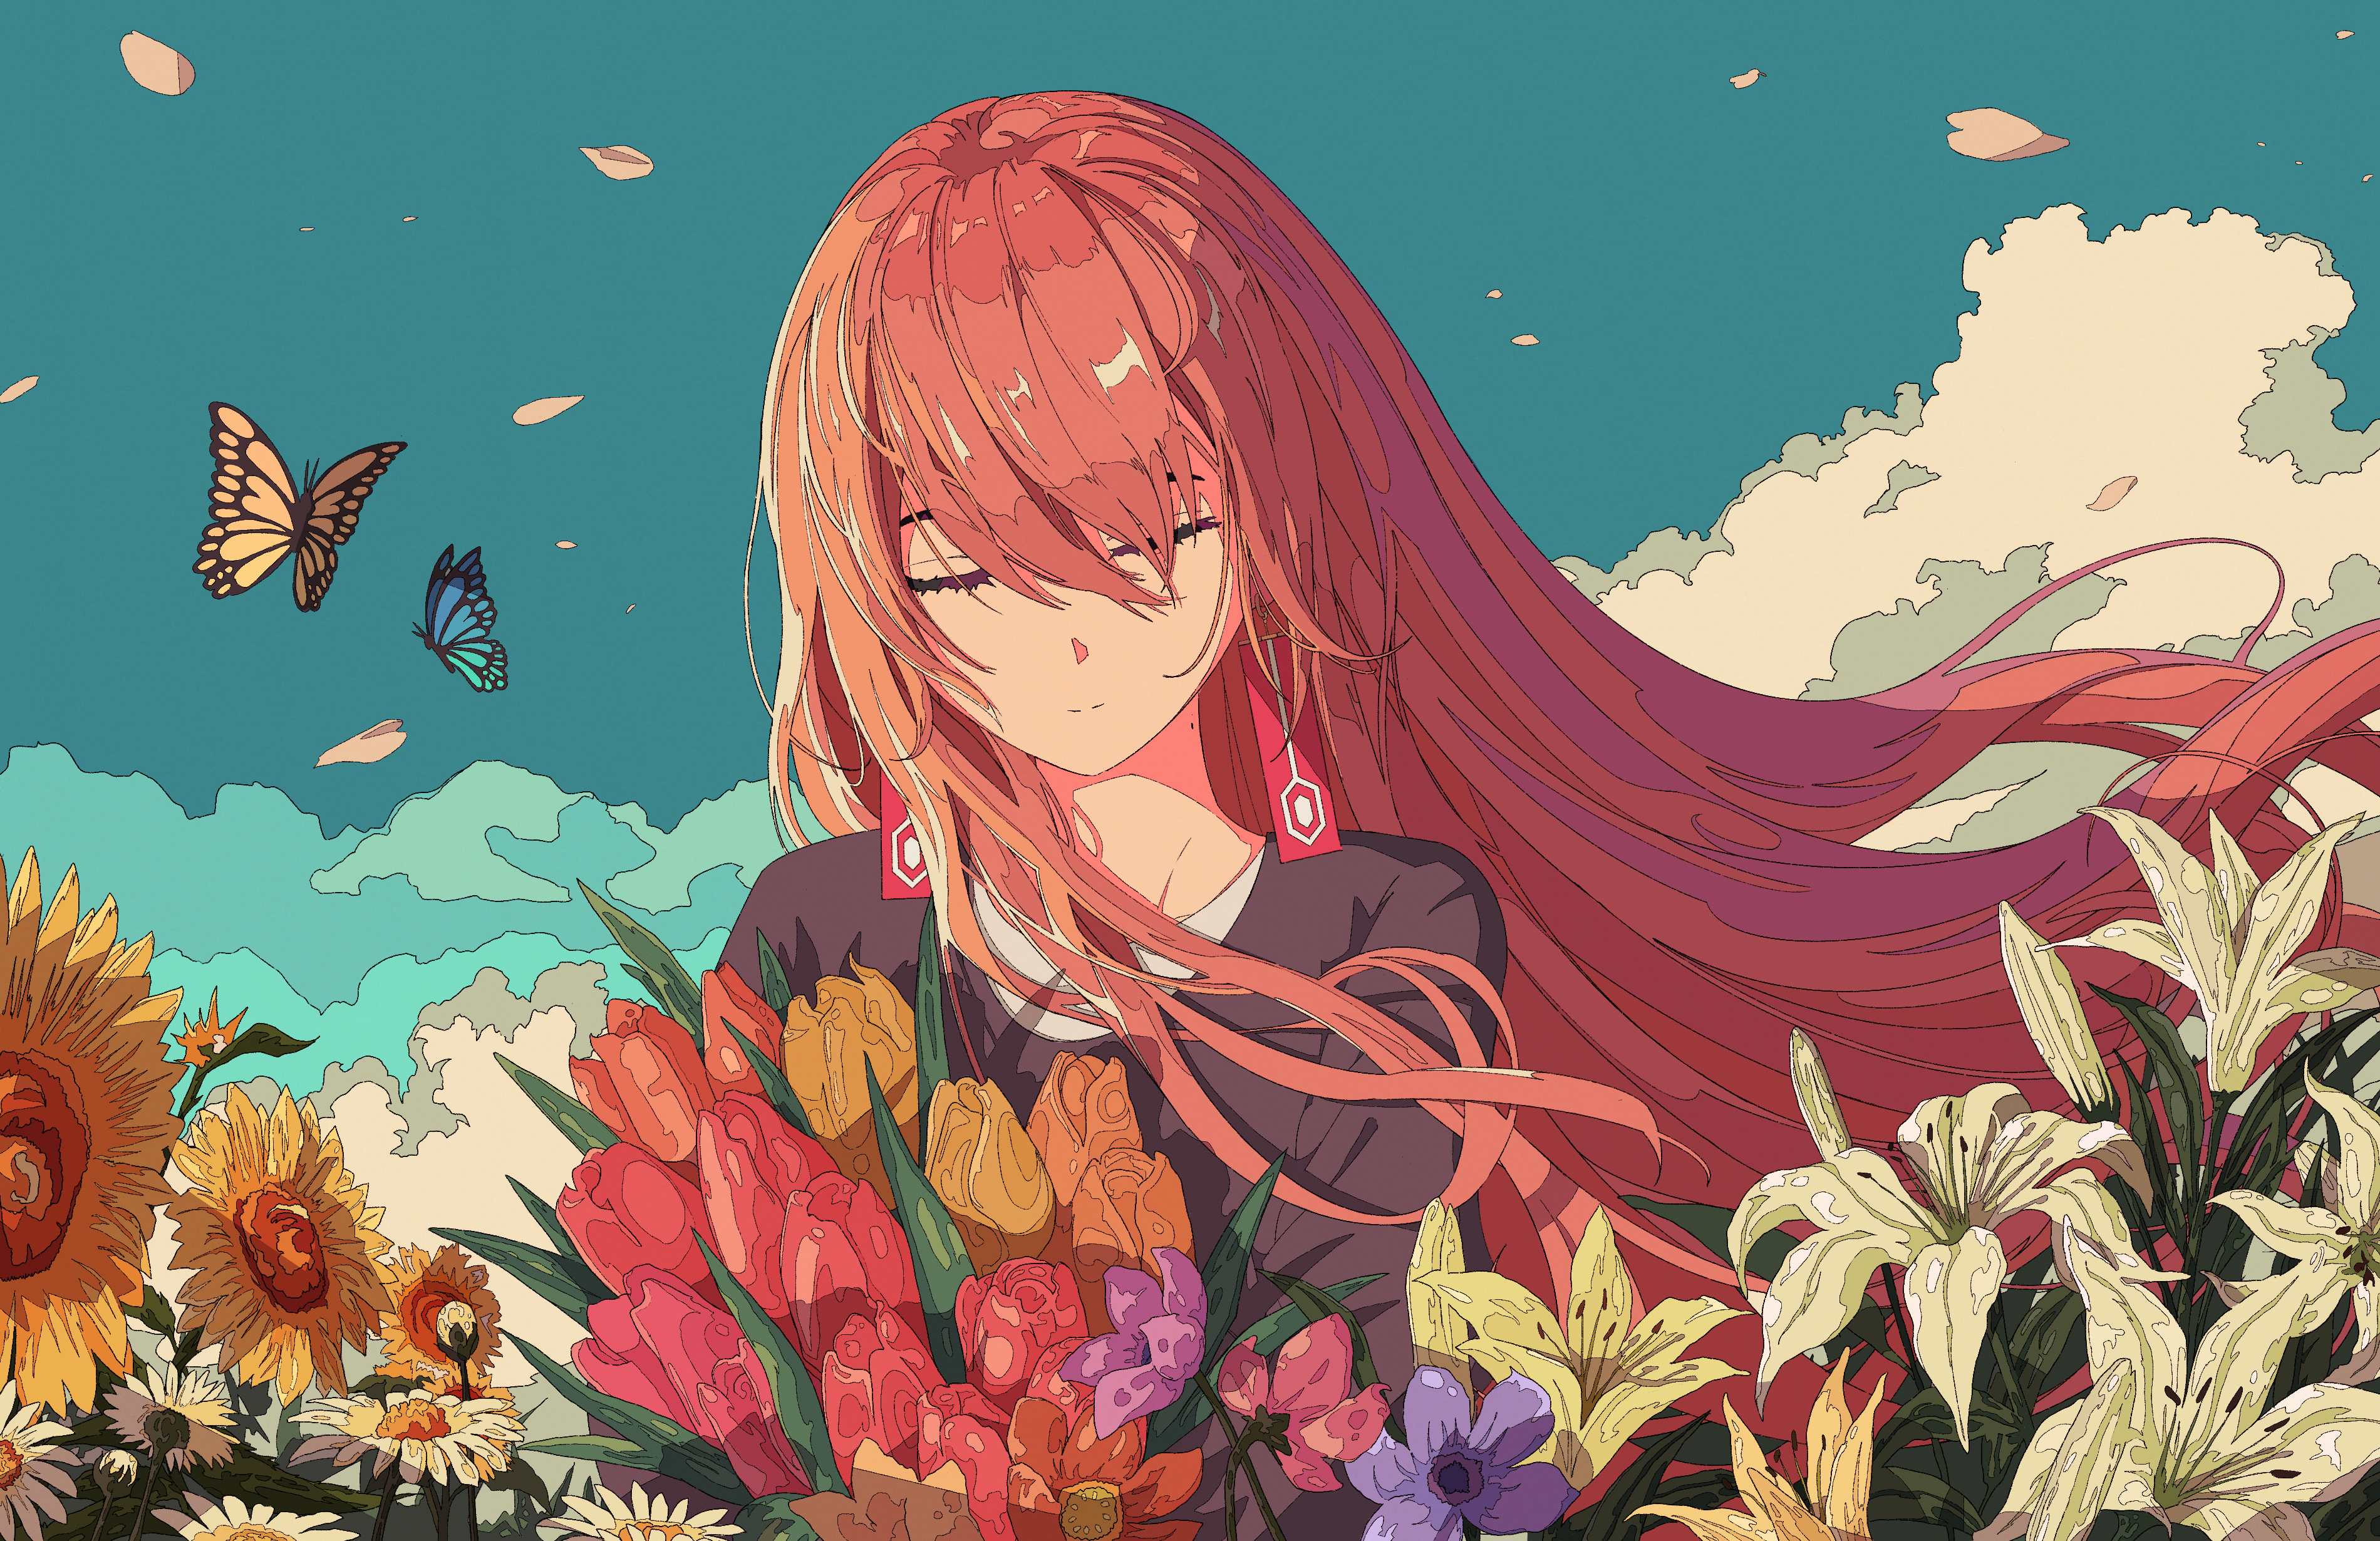 Umijin Anime Digital Art Artwork Illustration Environment Anime Girls Women Redhead Long Hair Nature 3800x2460